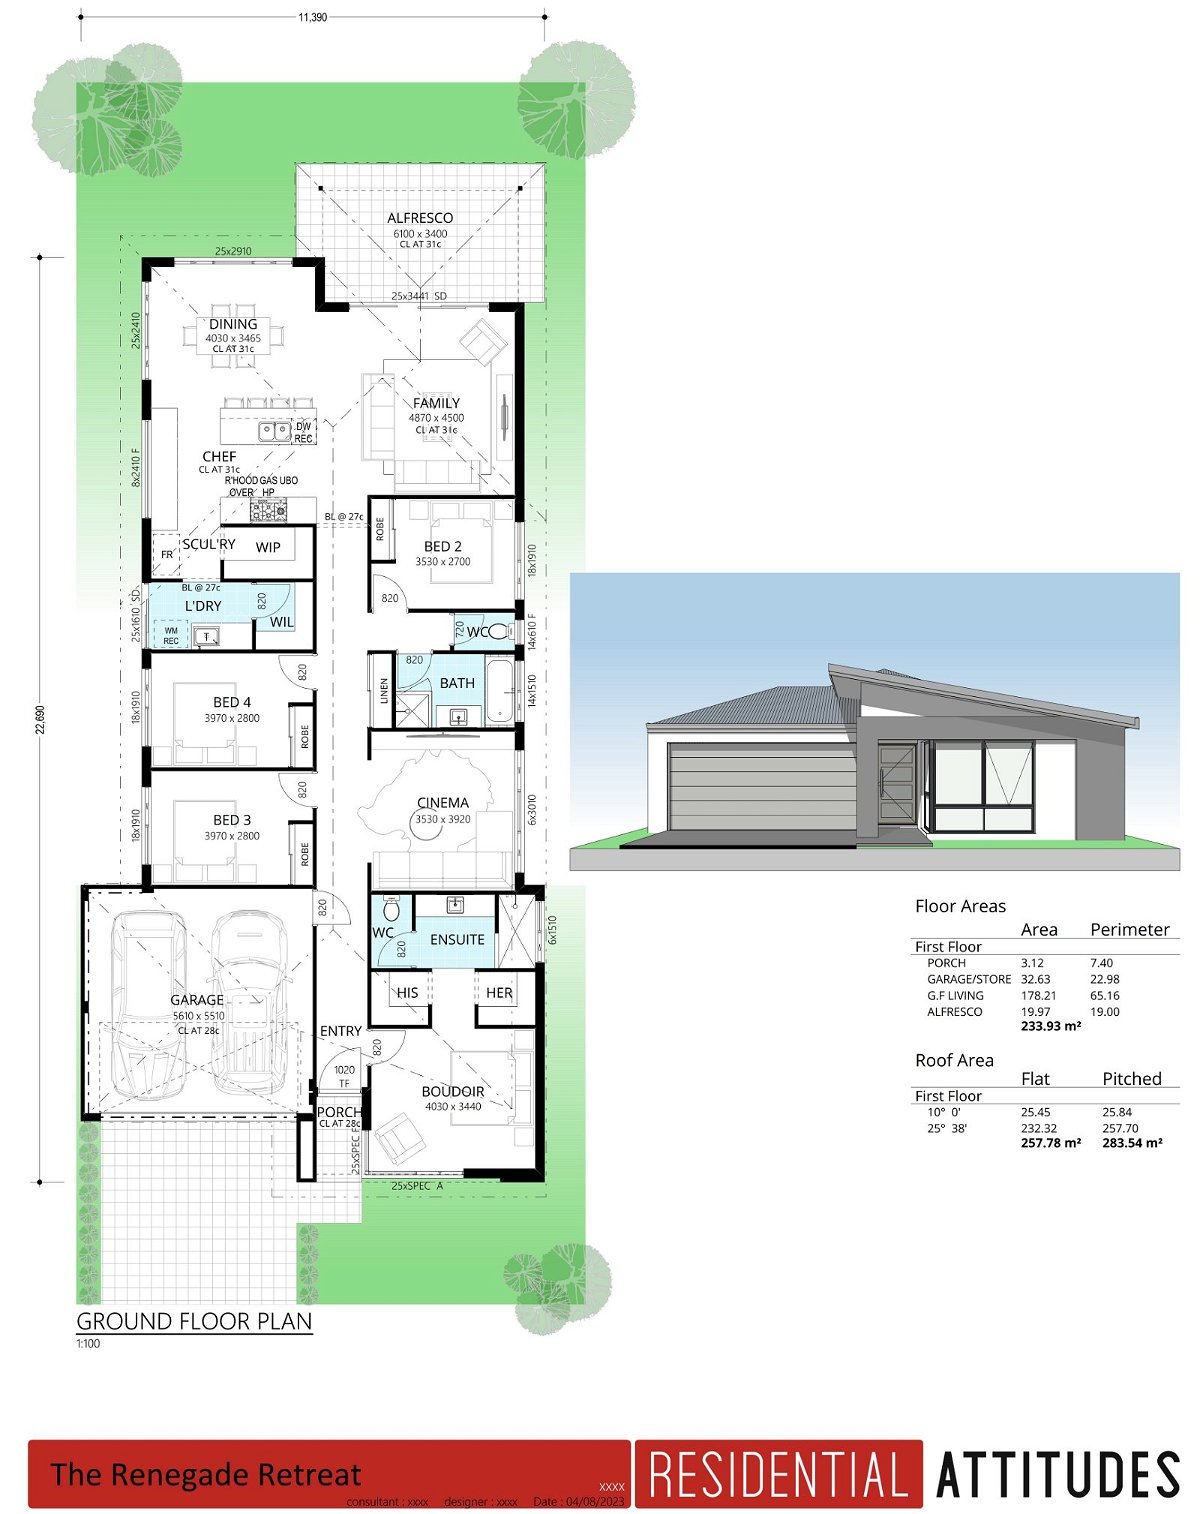 Residential Attitudes -  - Floorplan - Renegade Retreat Floorplan